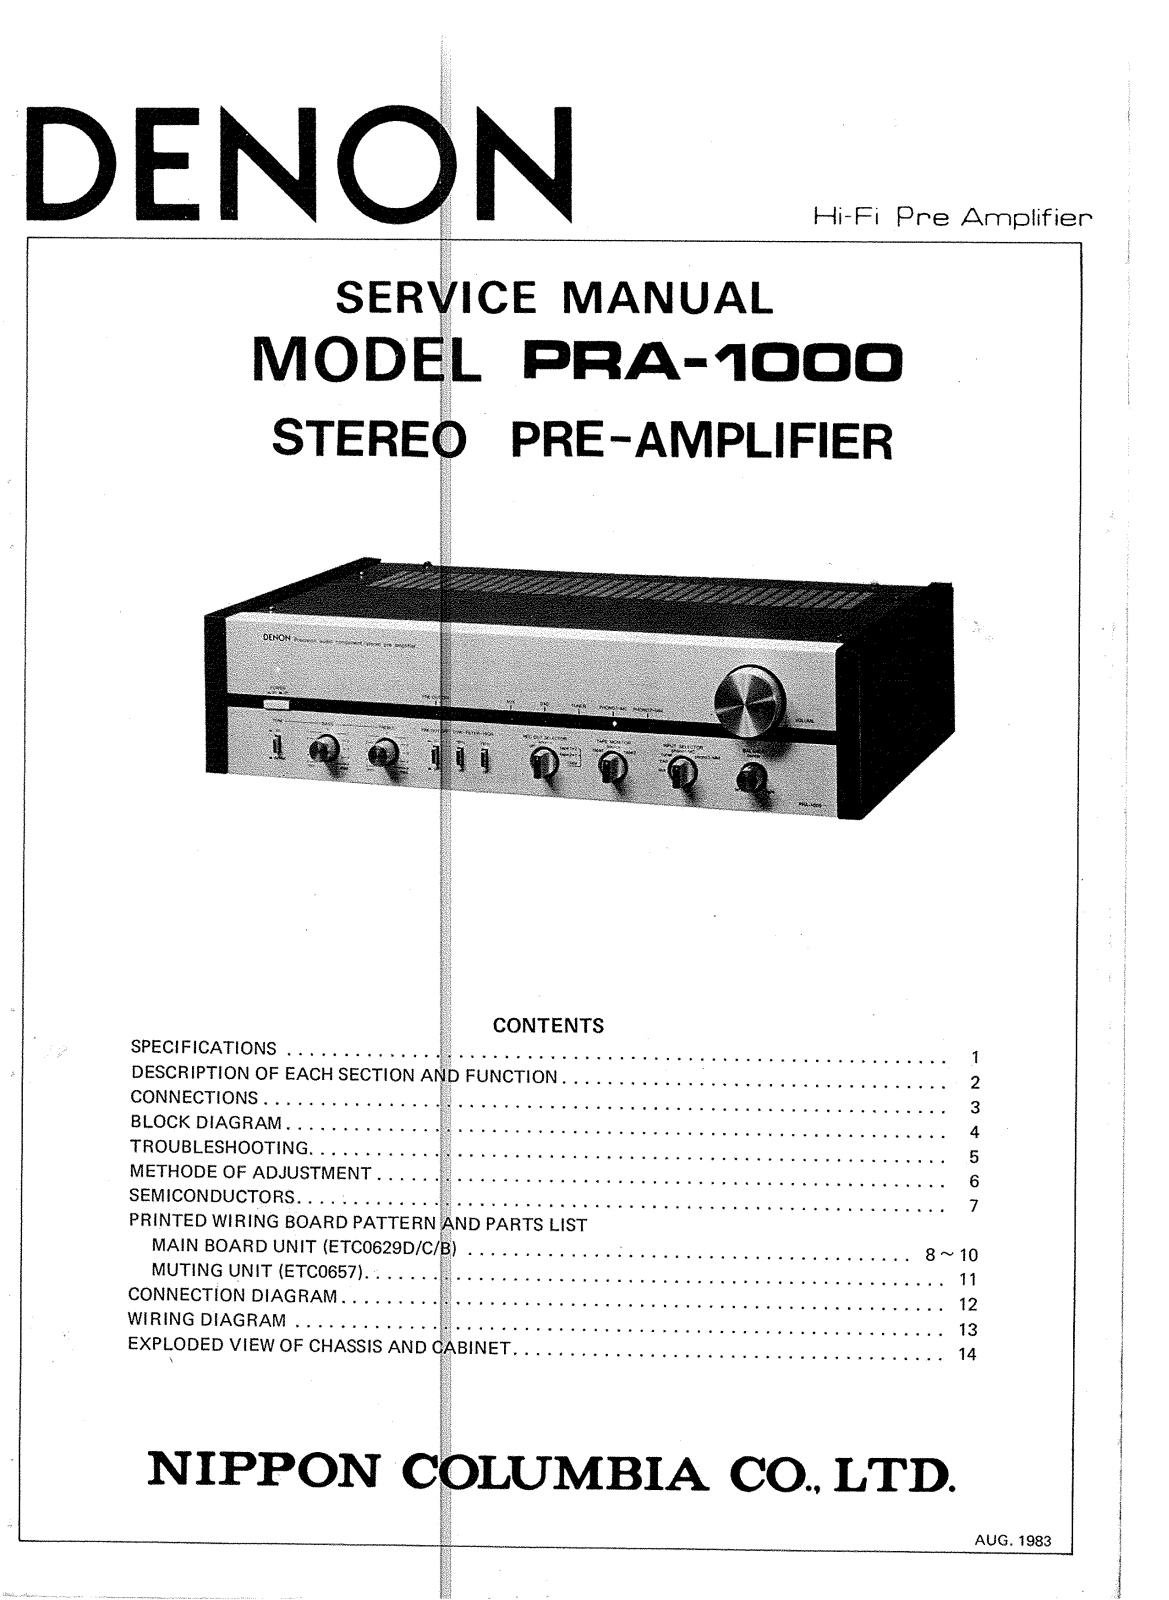 Denon PRA-1000 Service Manual